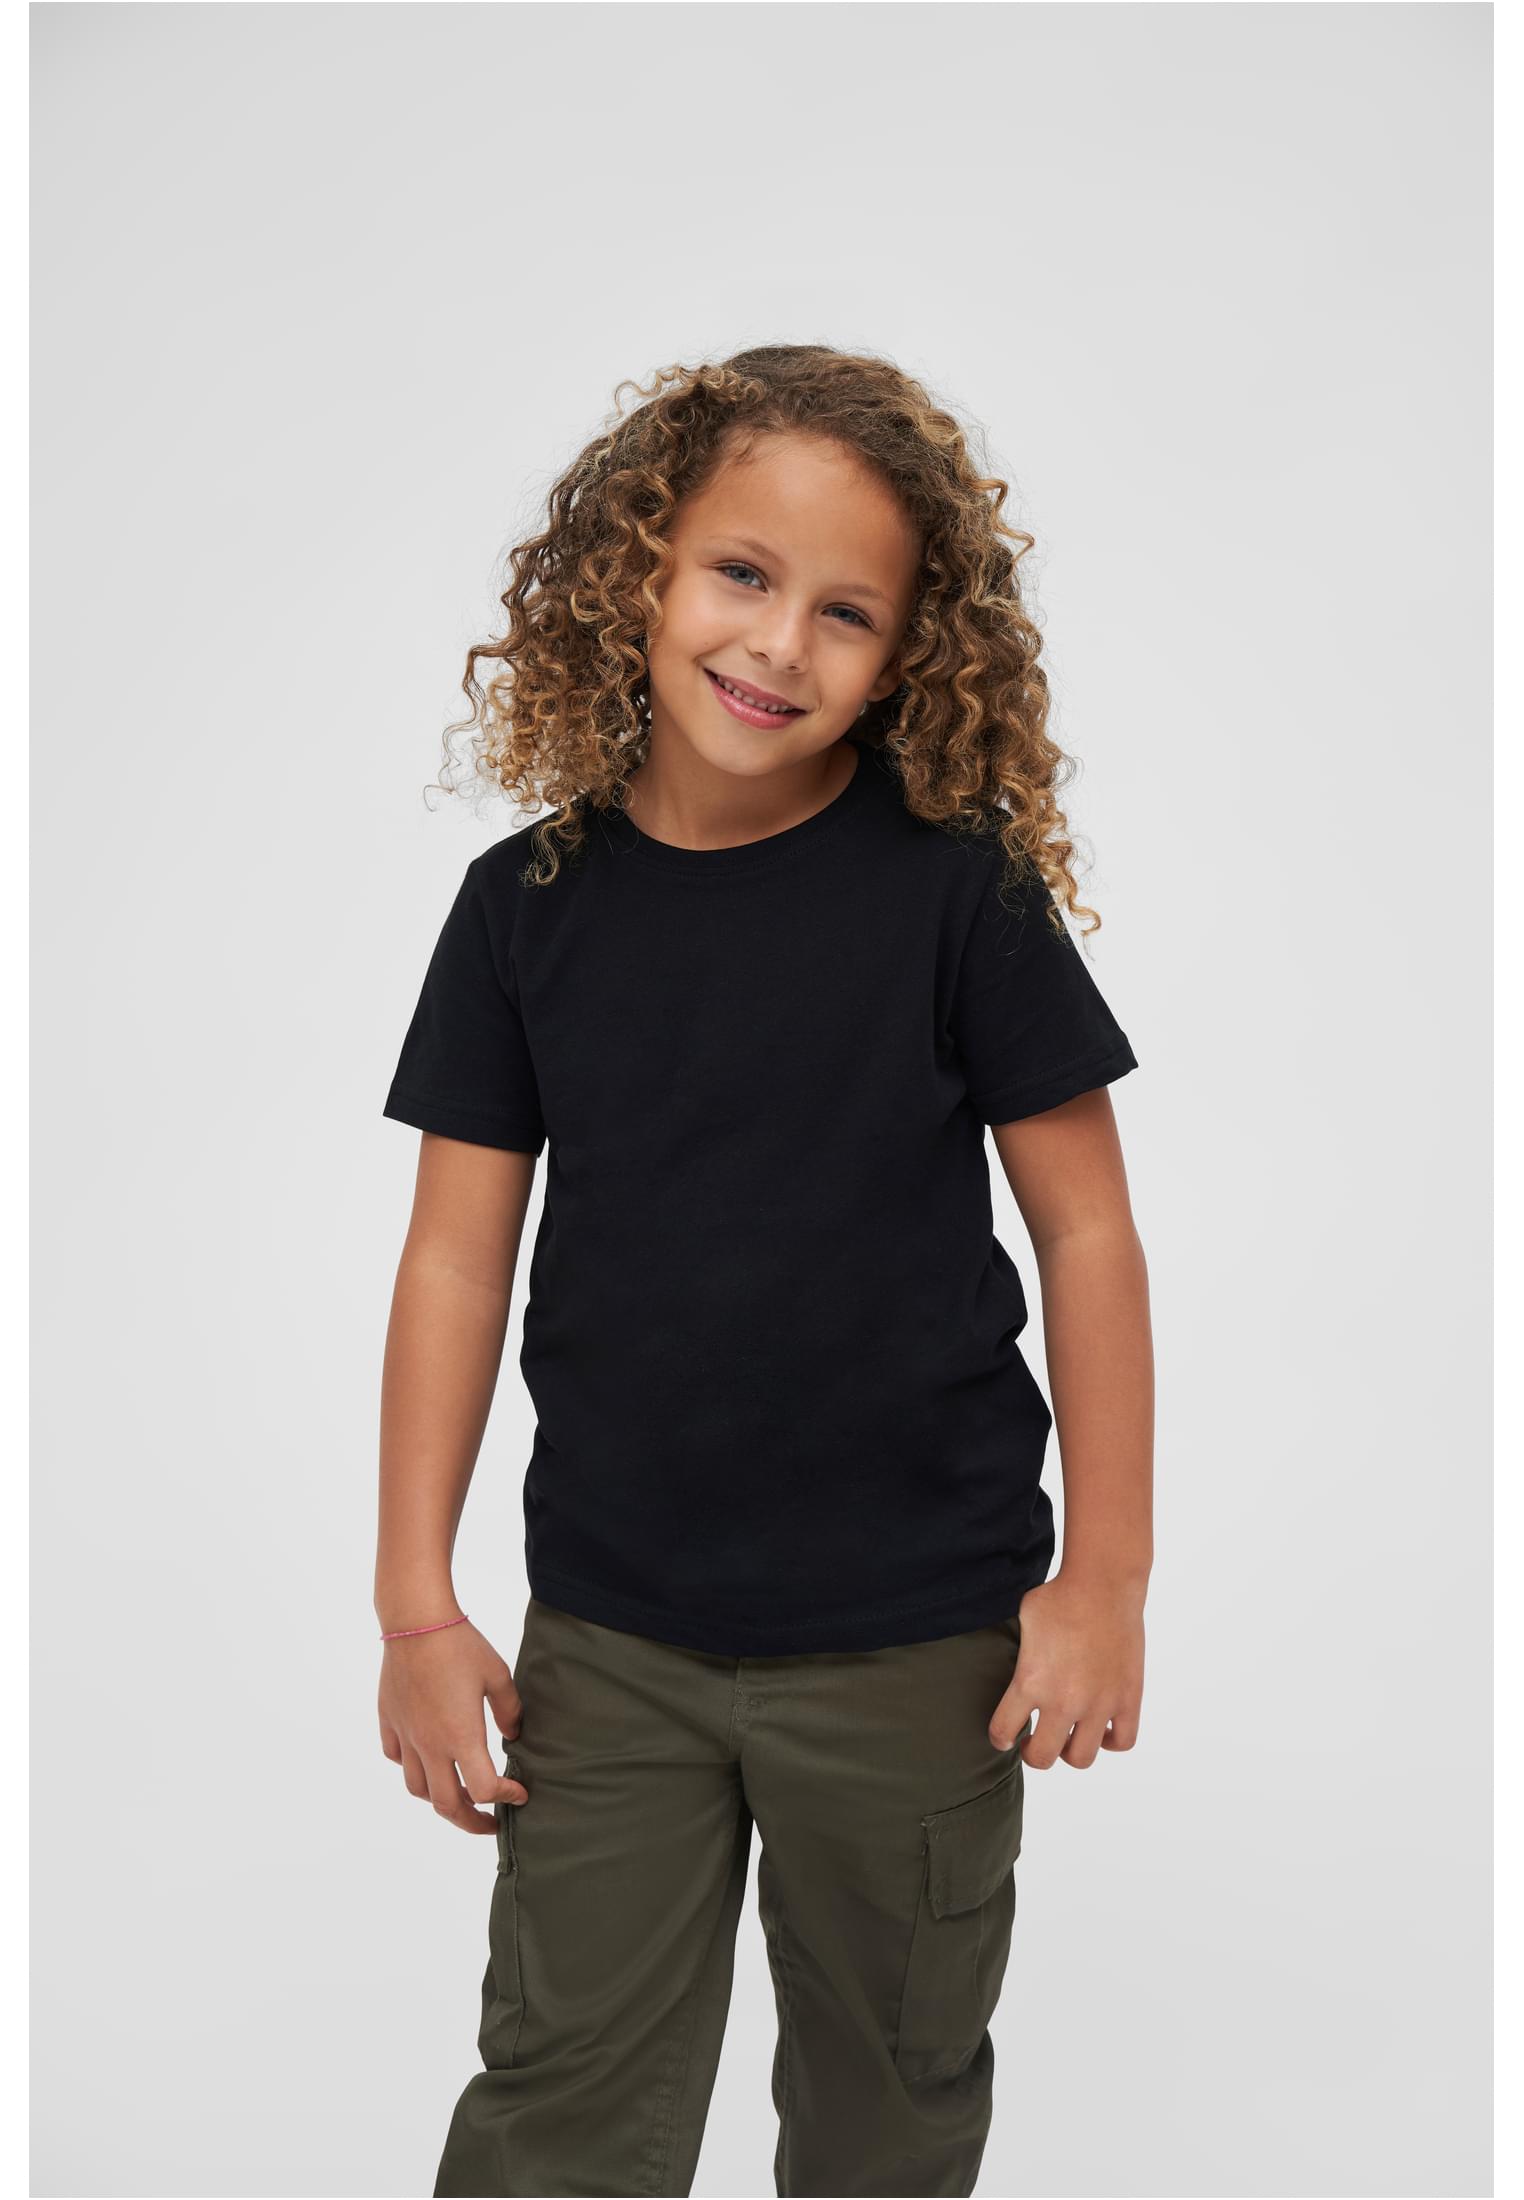 T-Shirts Kids T-Shirt in Farbe black